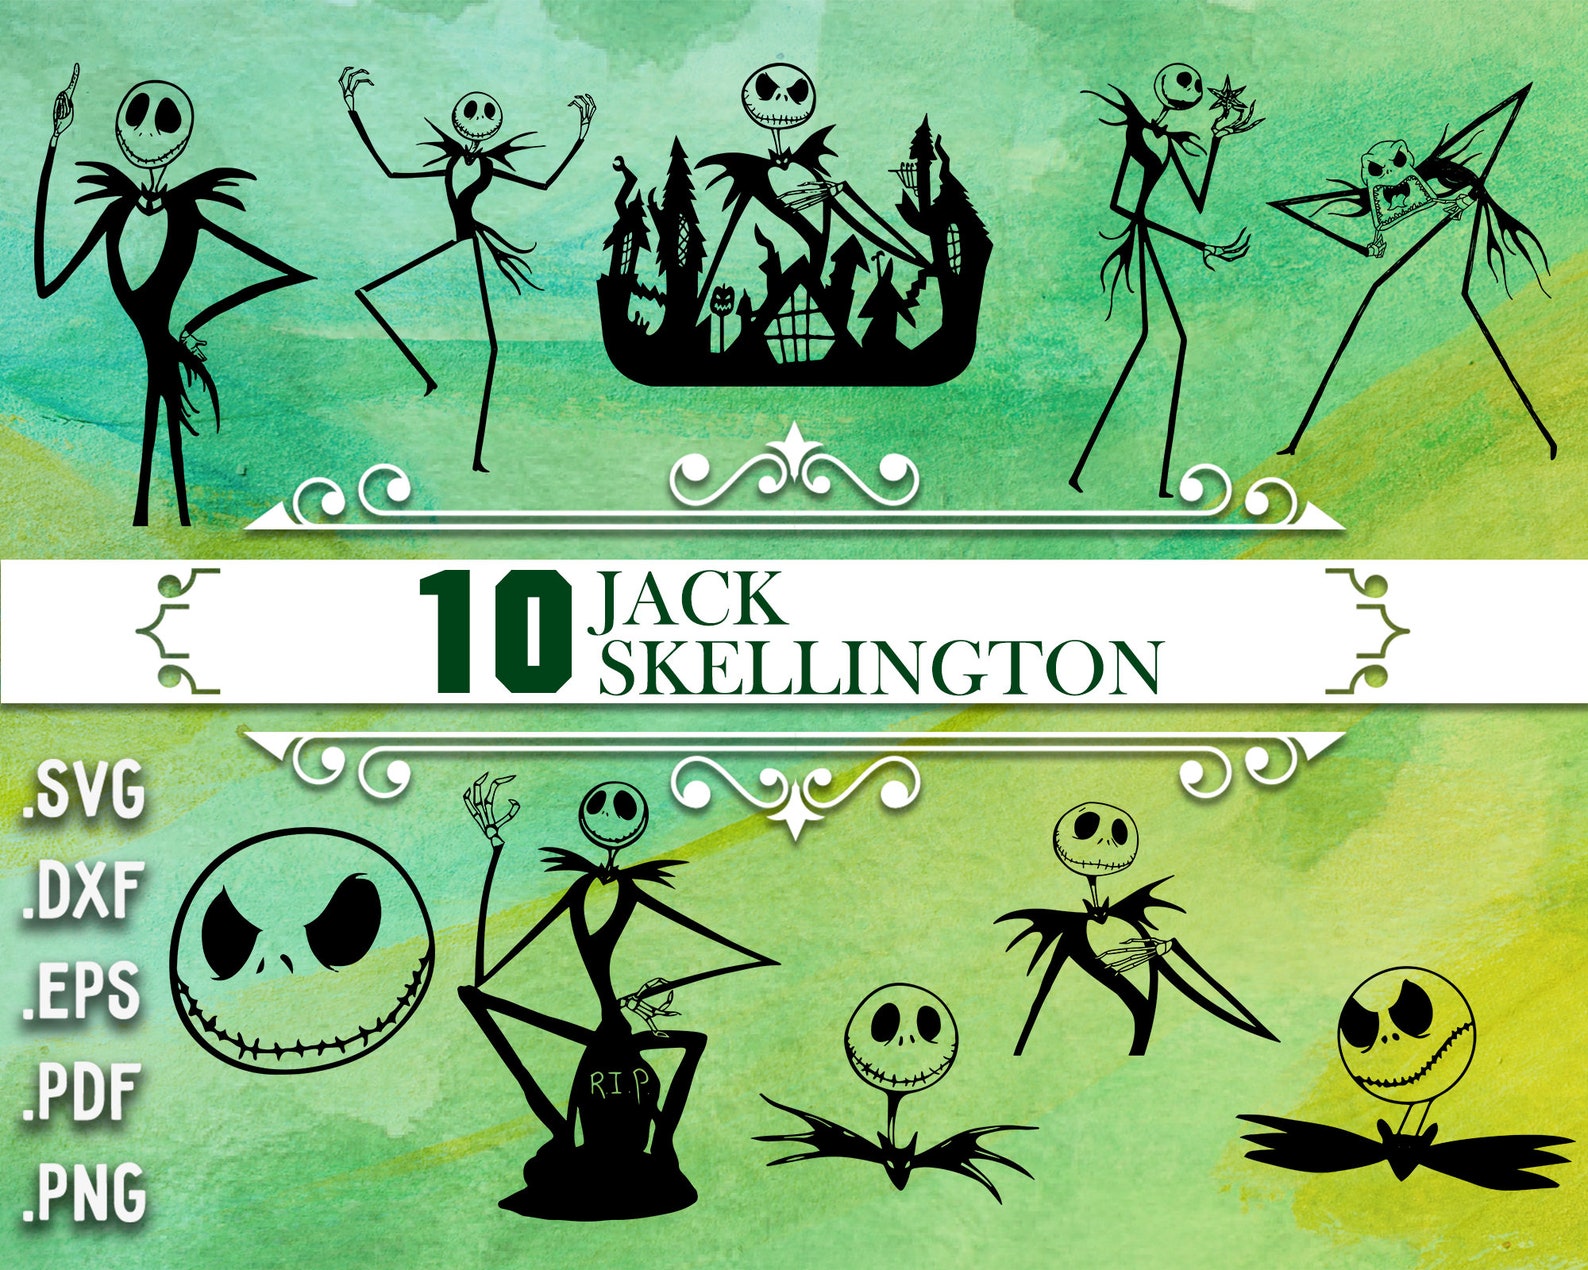 1. Jack Skellington Halloween Nail Design - wide 8